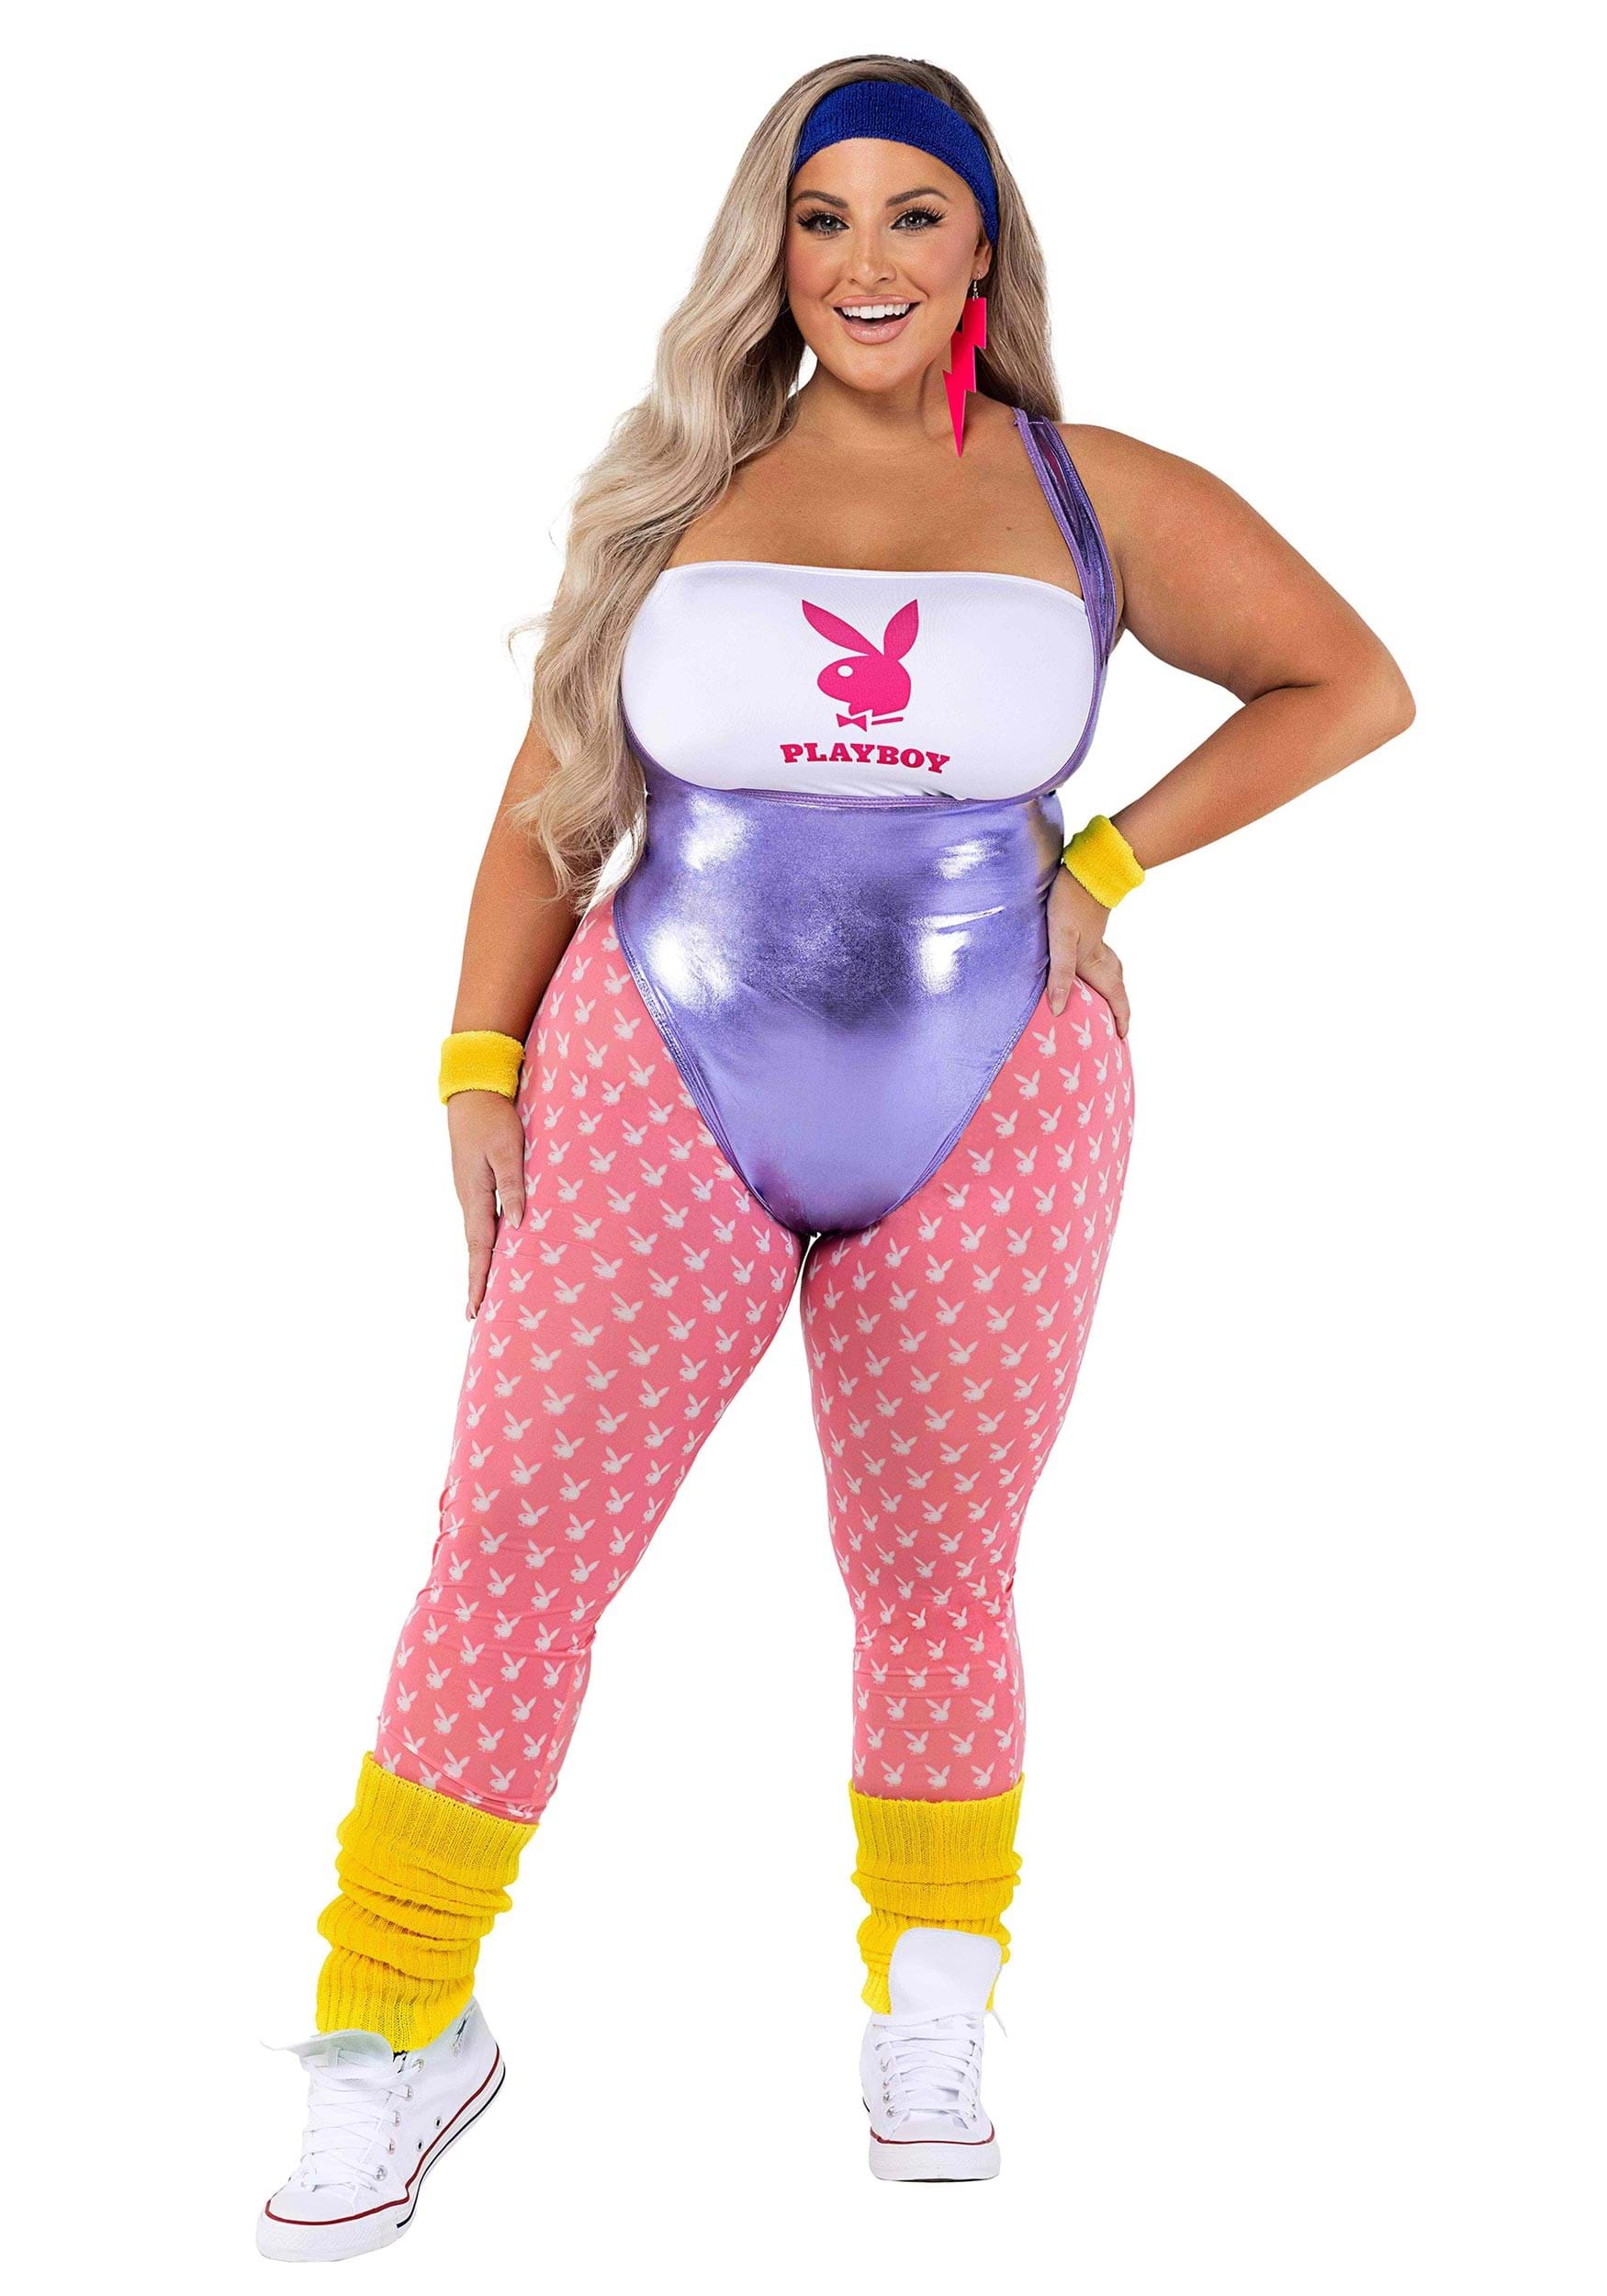 Plus Size Women's Playboy 80s Workout Costume